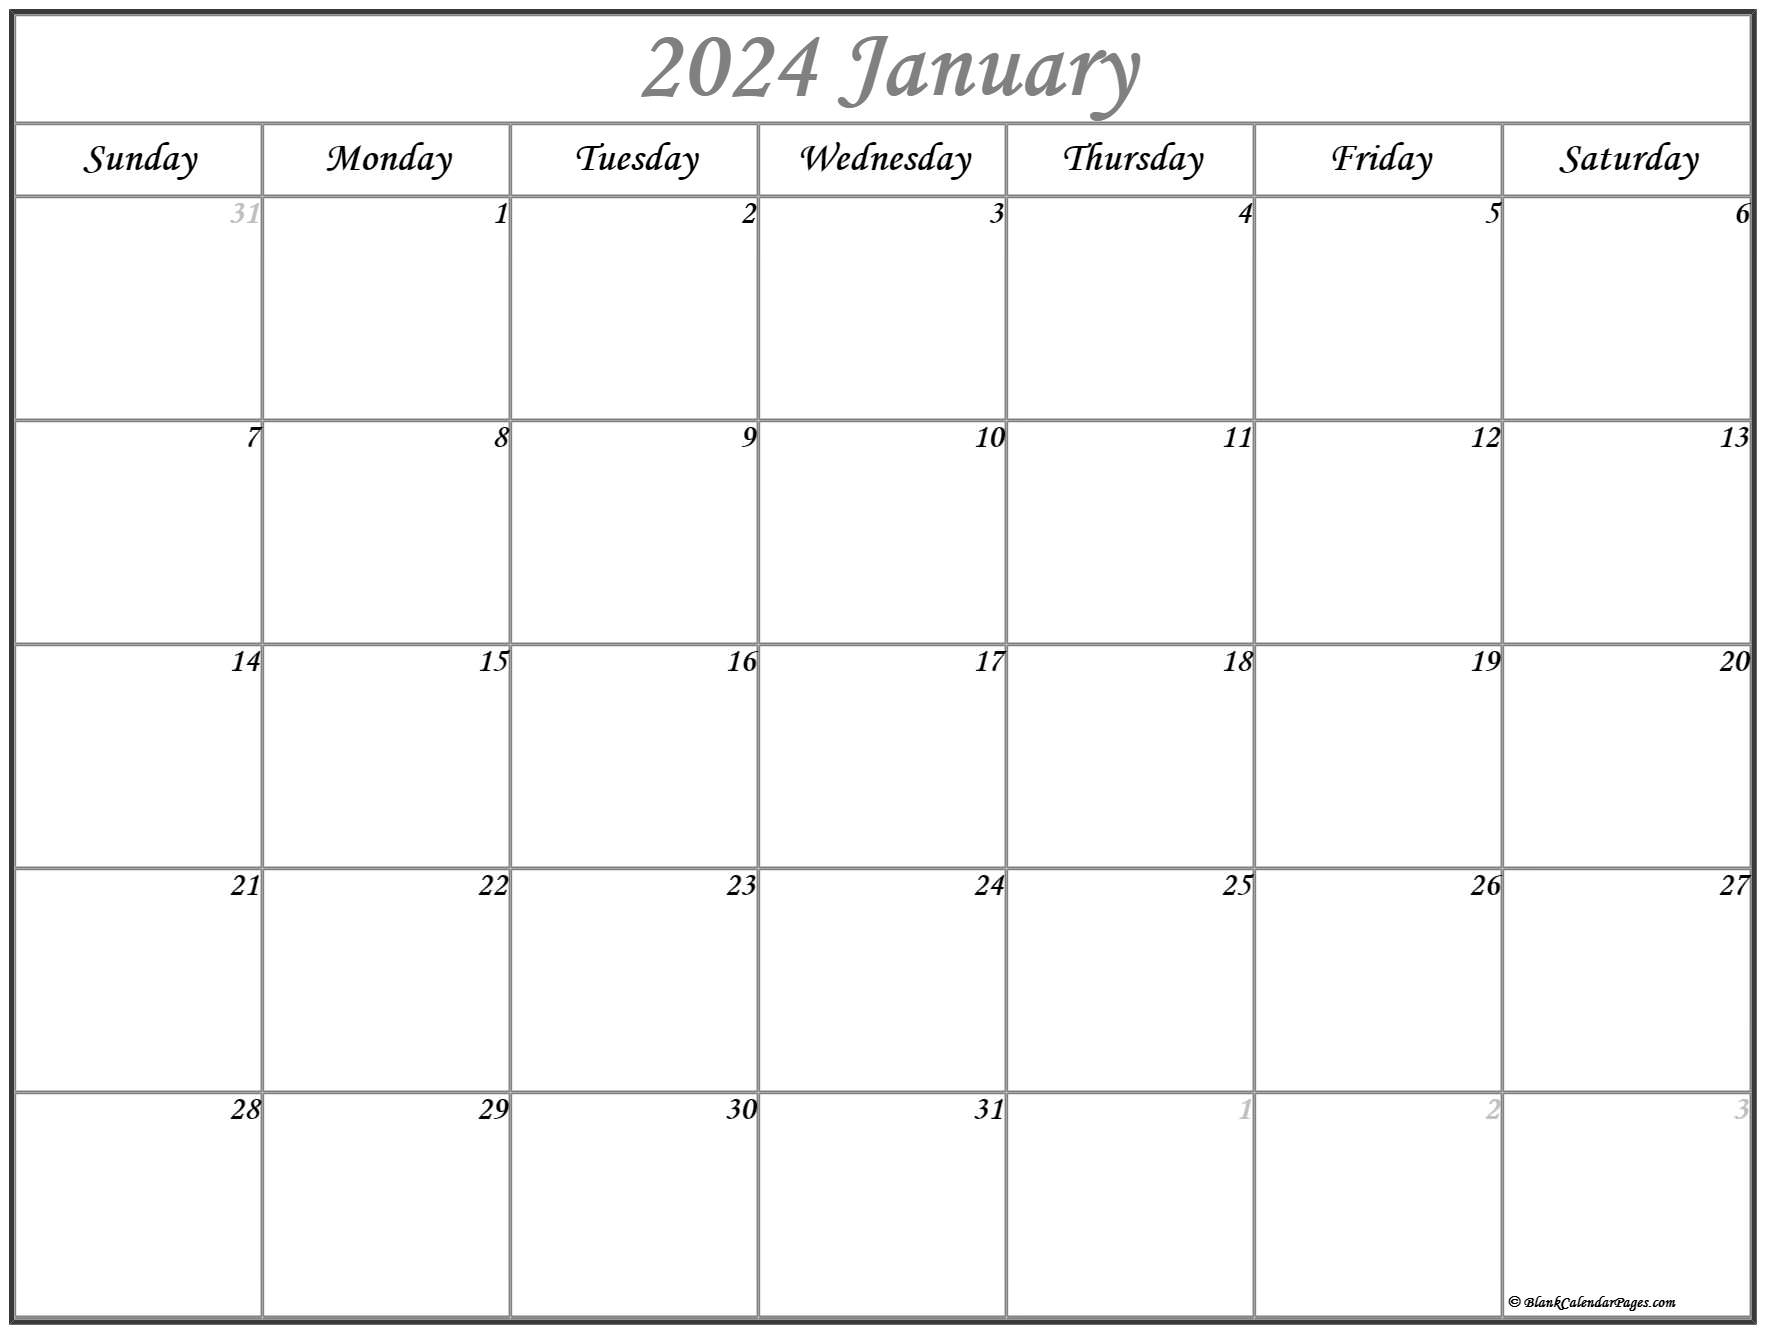 2024 Monthly Calendar Pdf Free Printable Templates 2024 Monthly - Free Printable 2024 Monthly Calendar With Pictures